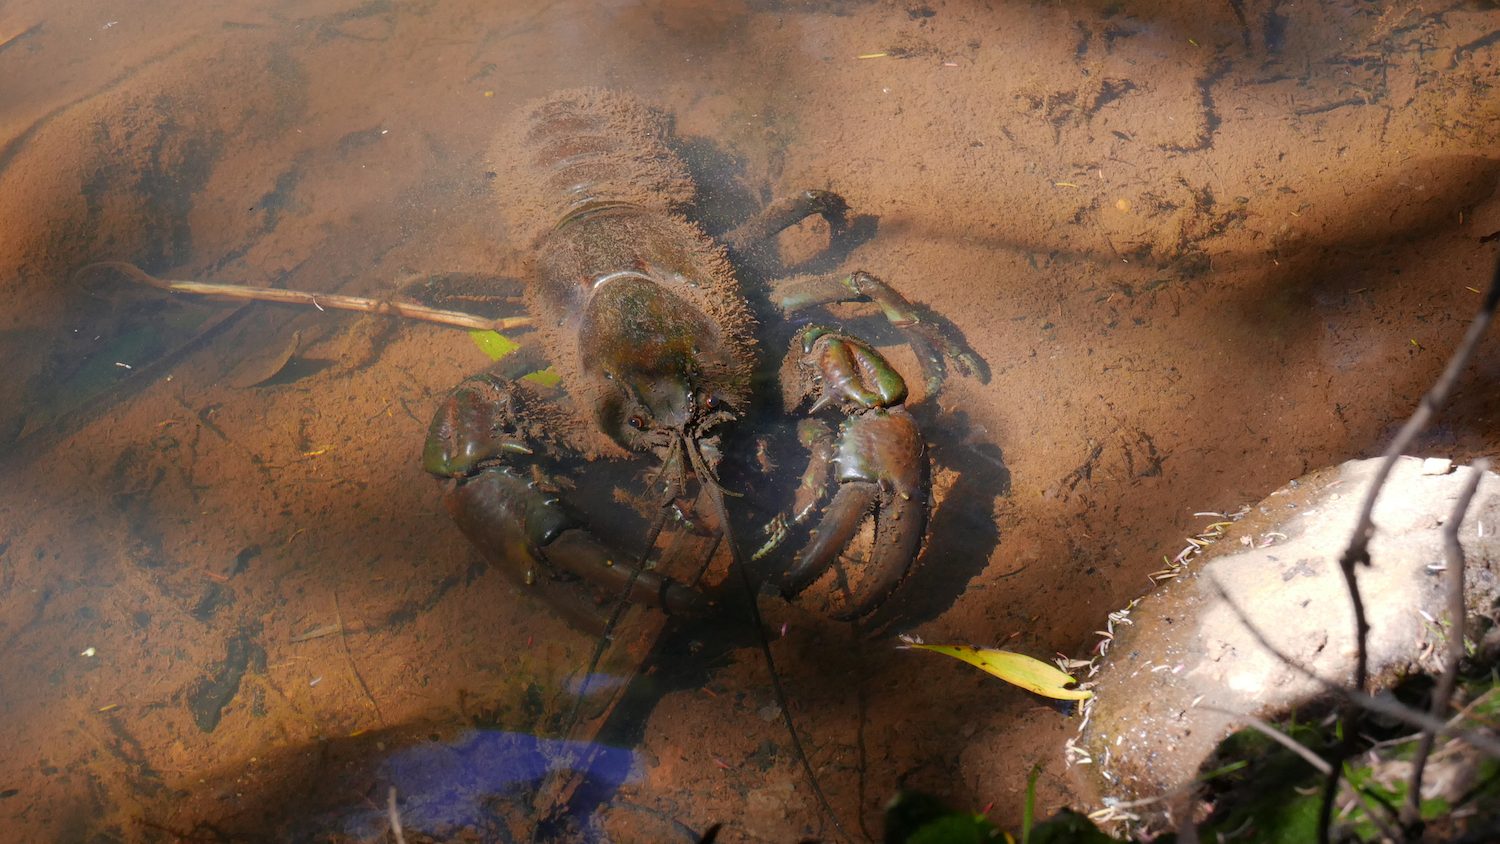 a crayfish hiding in murky water